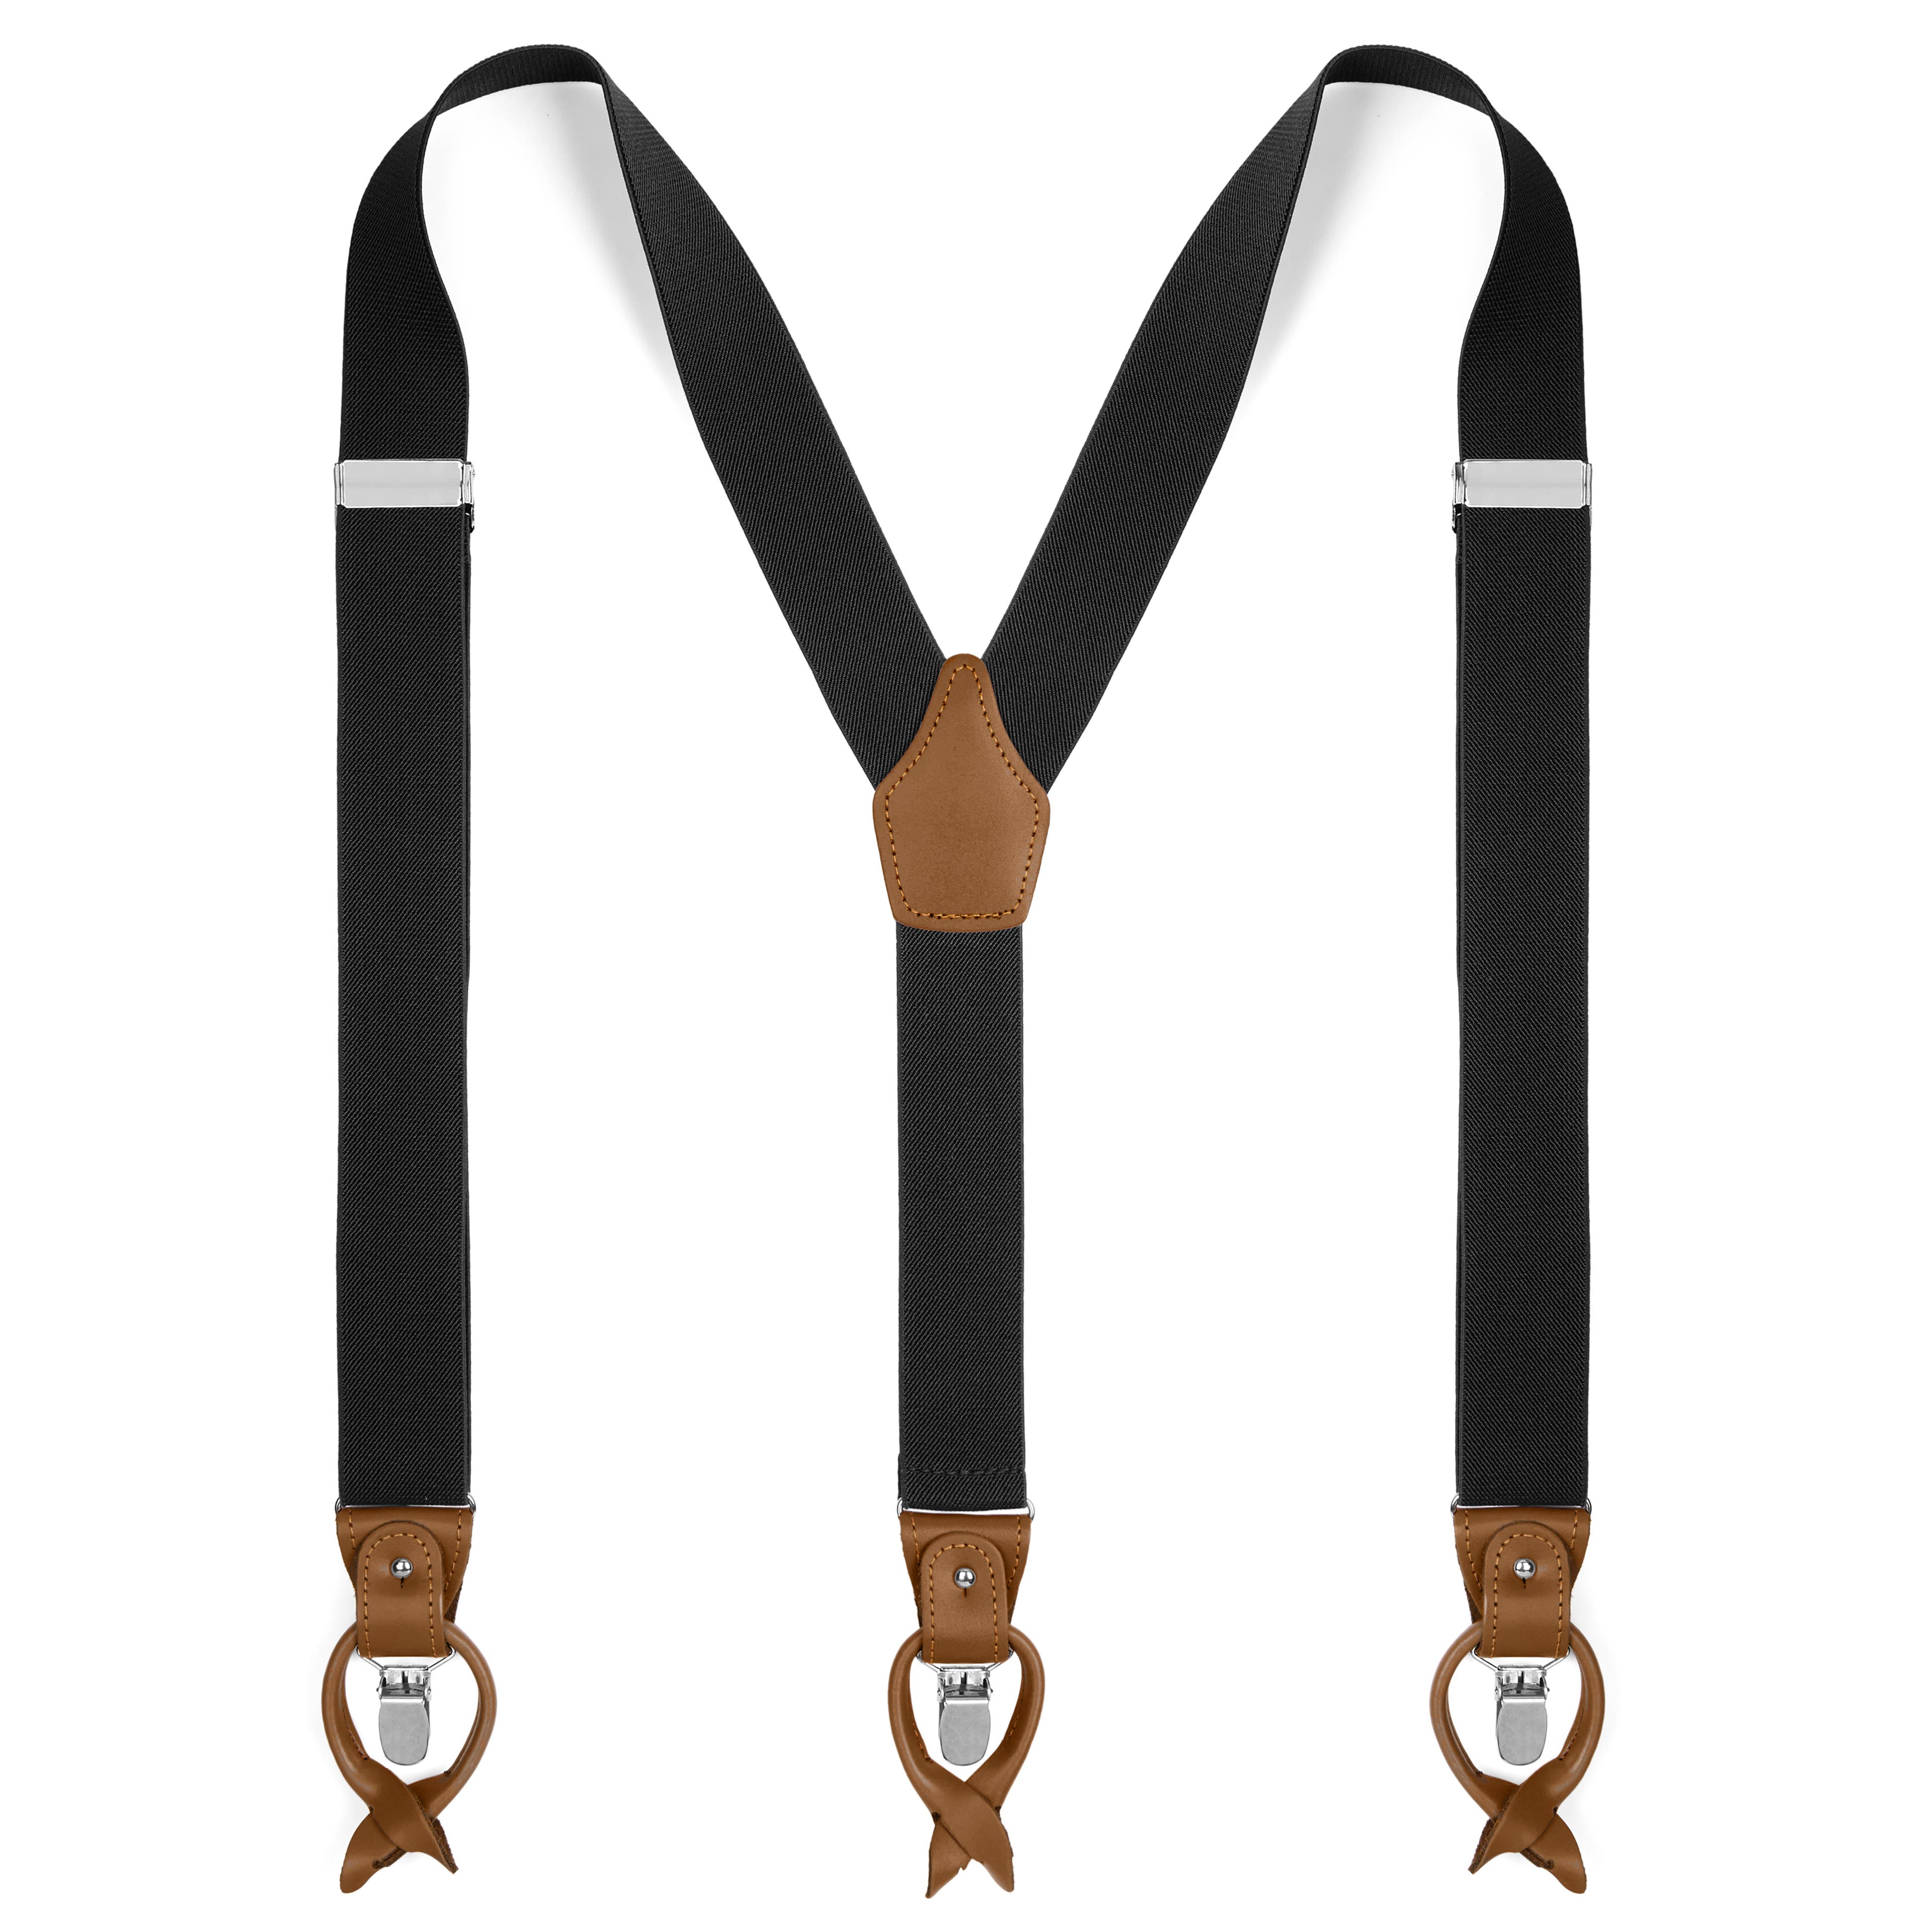 Wide Black Convertible Suspenders